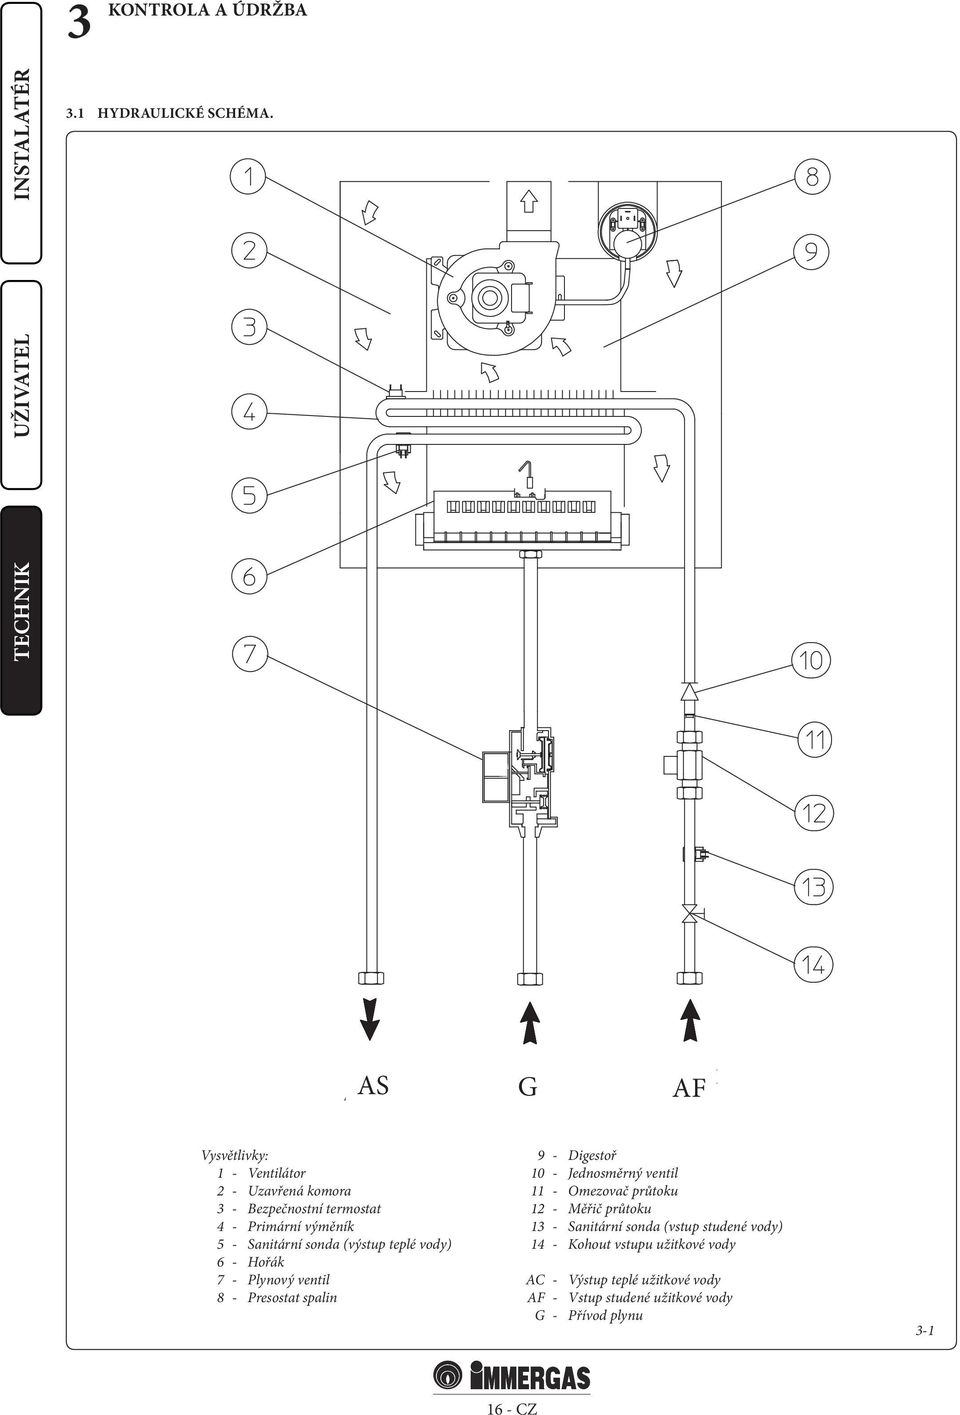 sonda (výstup teplé vody) 6 - Hořák 7 - Plynový ventil 8 - Presostat spalin 9 - Digestoř 10 - Jednosměrný ventil 11 -